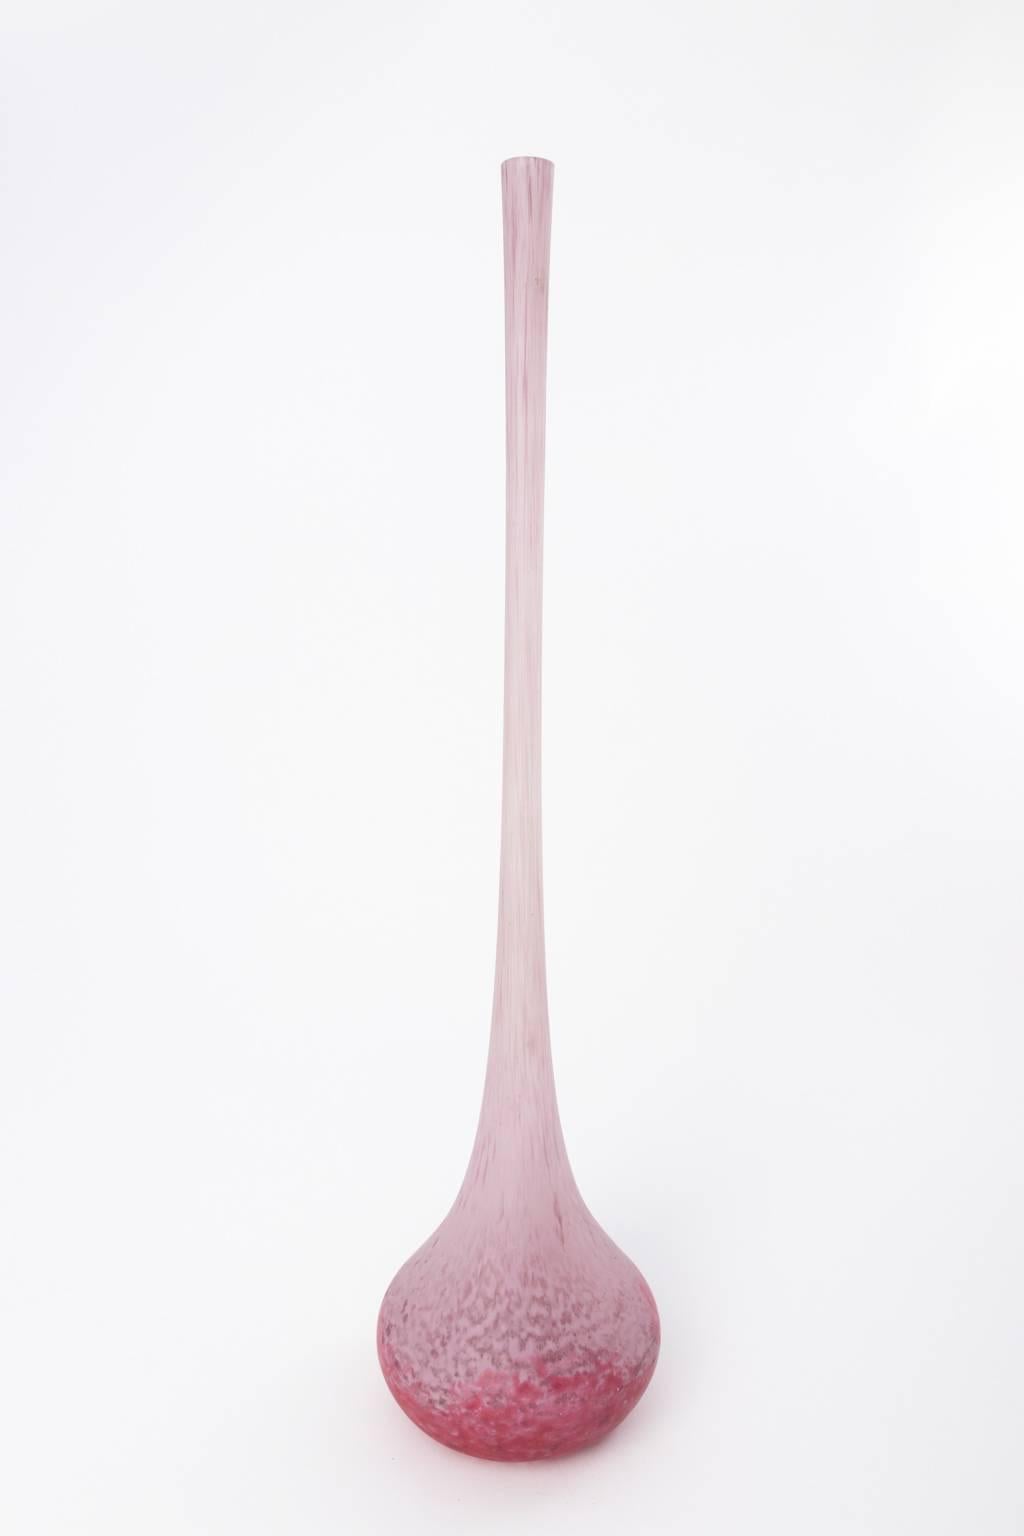 Daum Nancy France Art Glass Art Deco Stick Vase 2